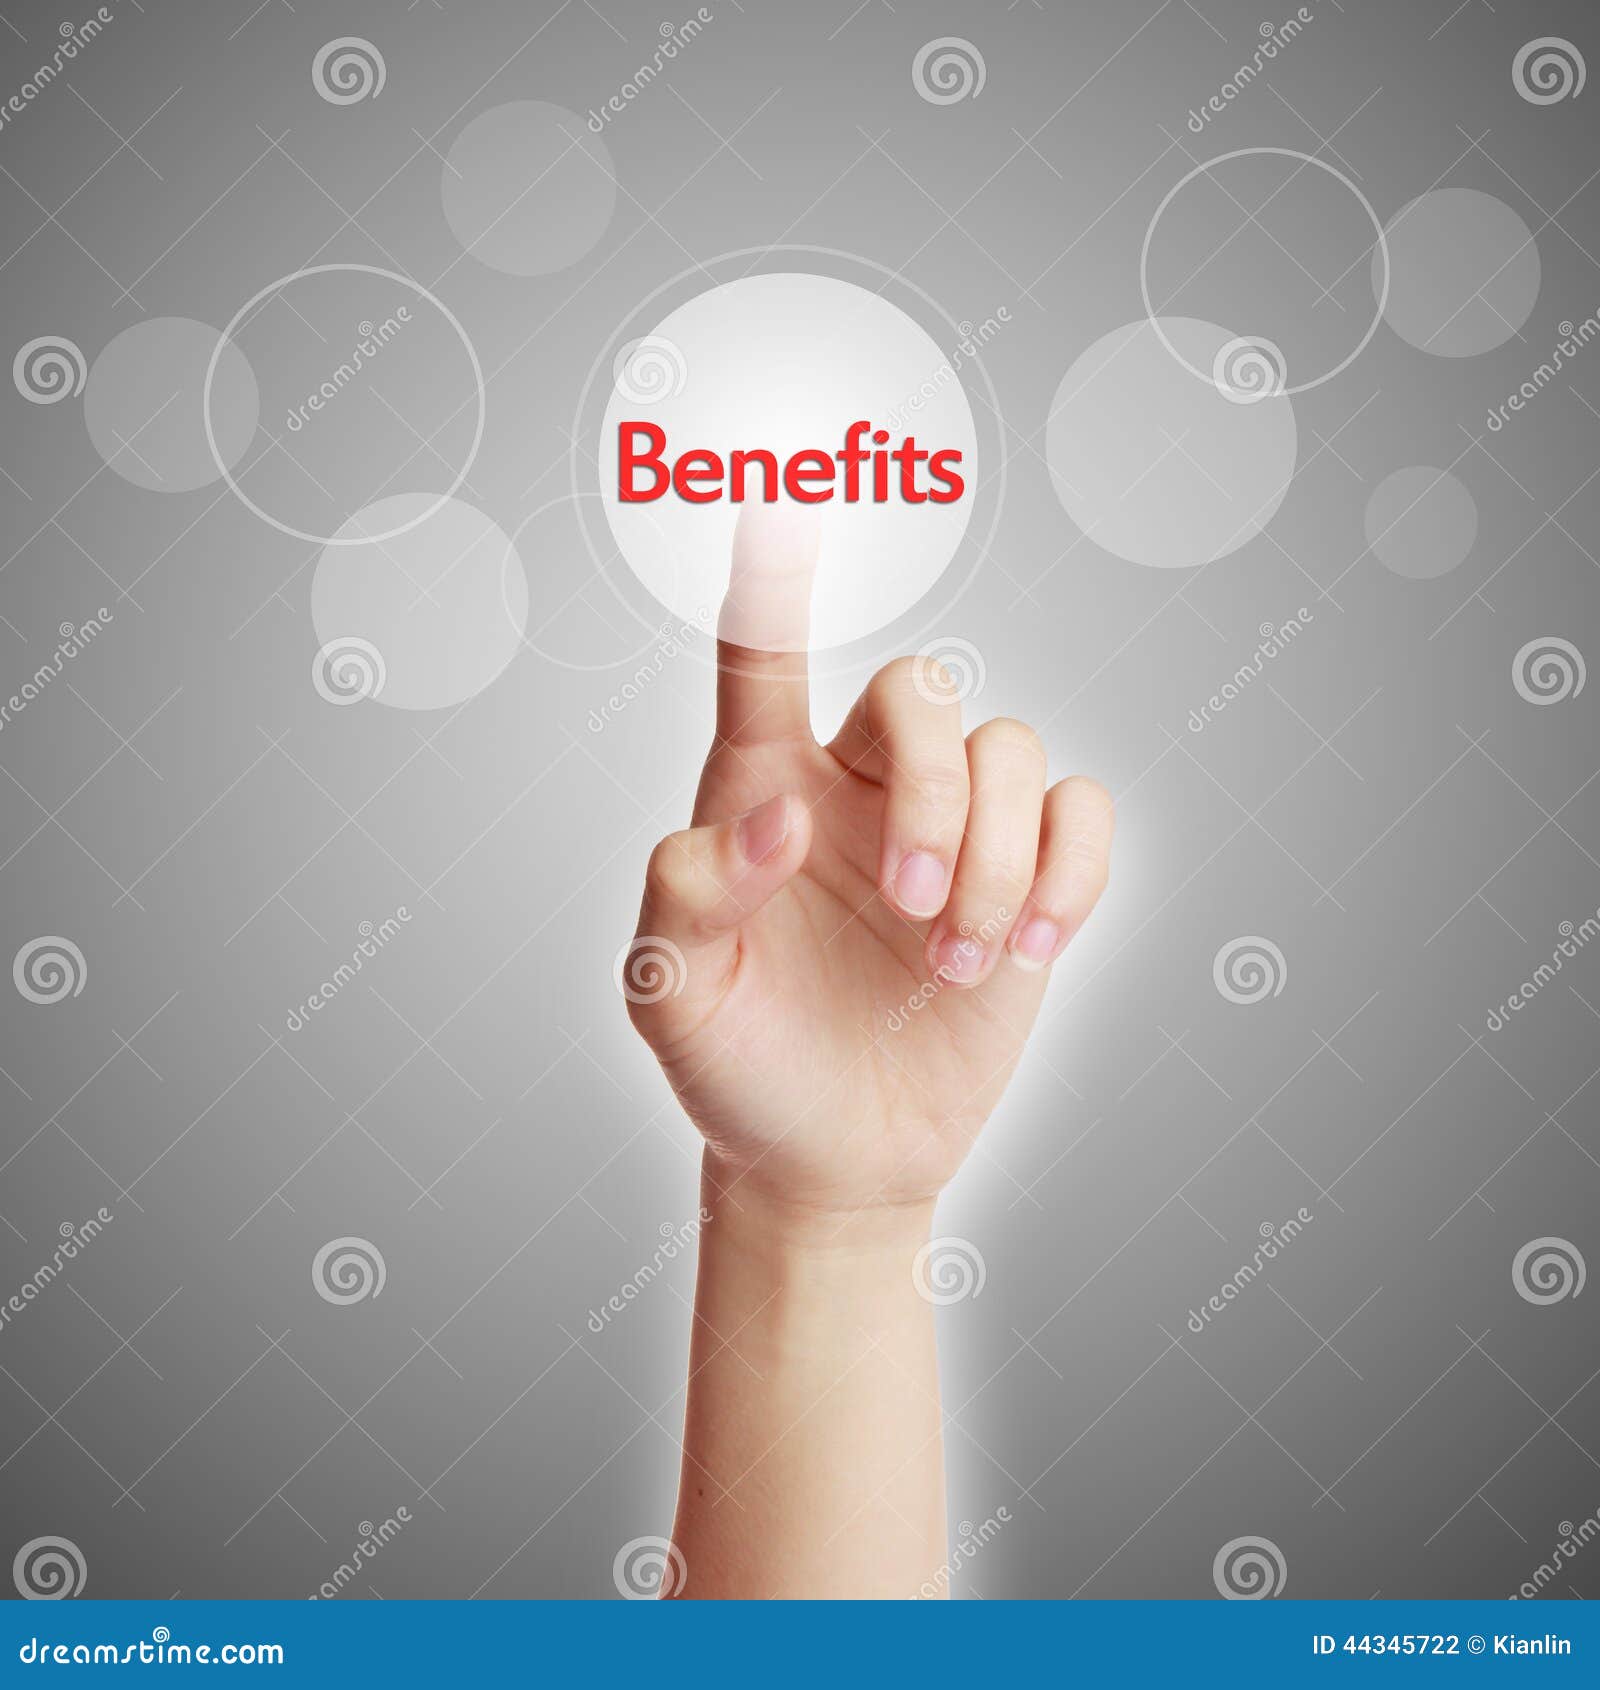 benefits concept